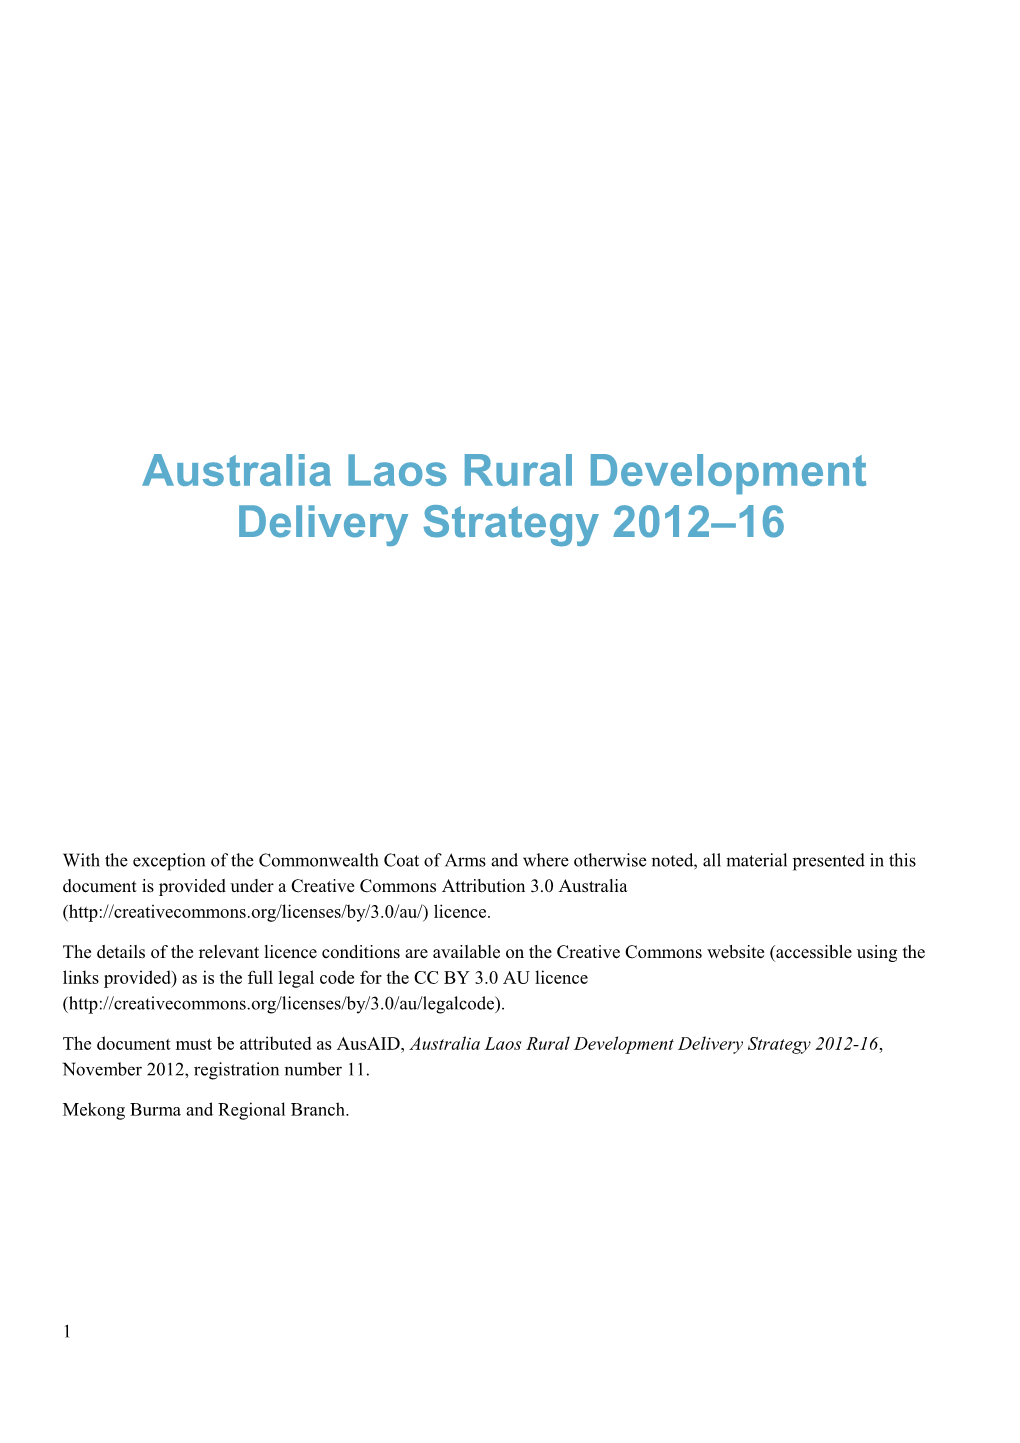 Australia Laos Rural Development Delivery Strategy 2012 16